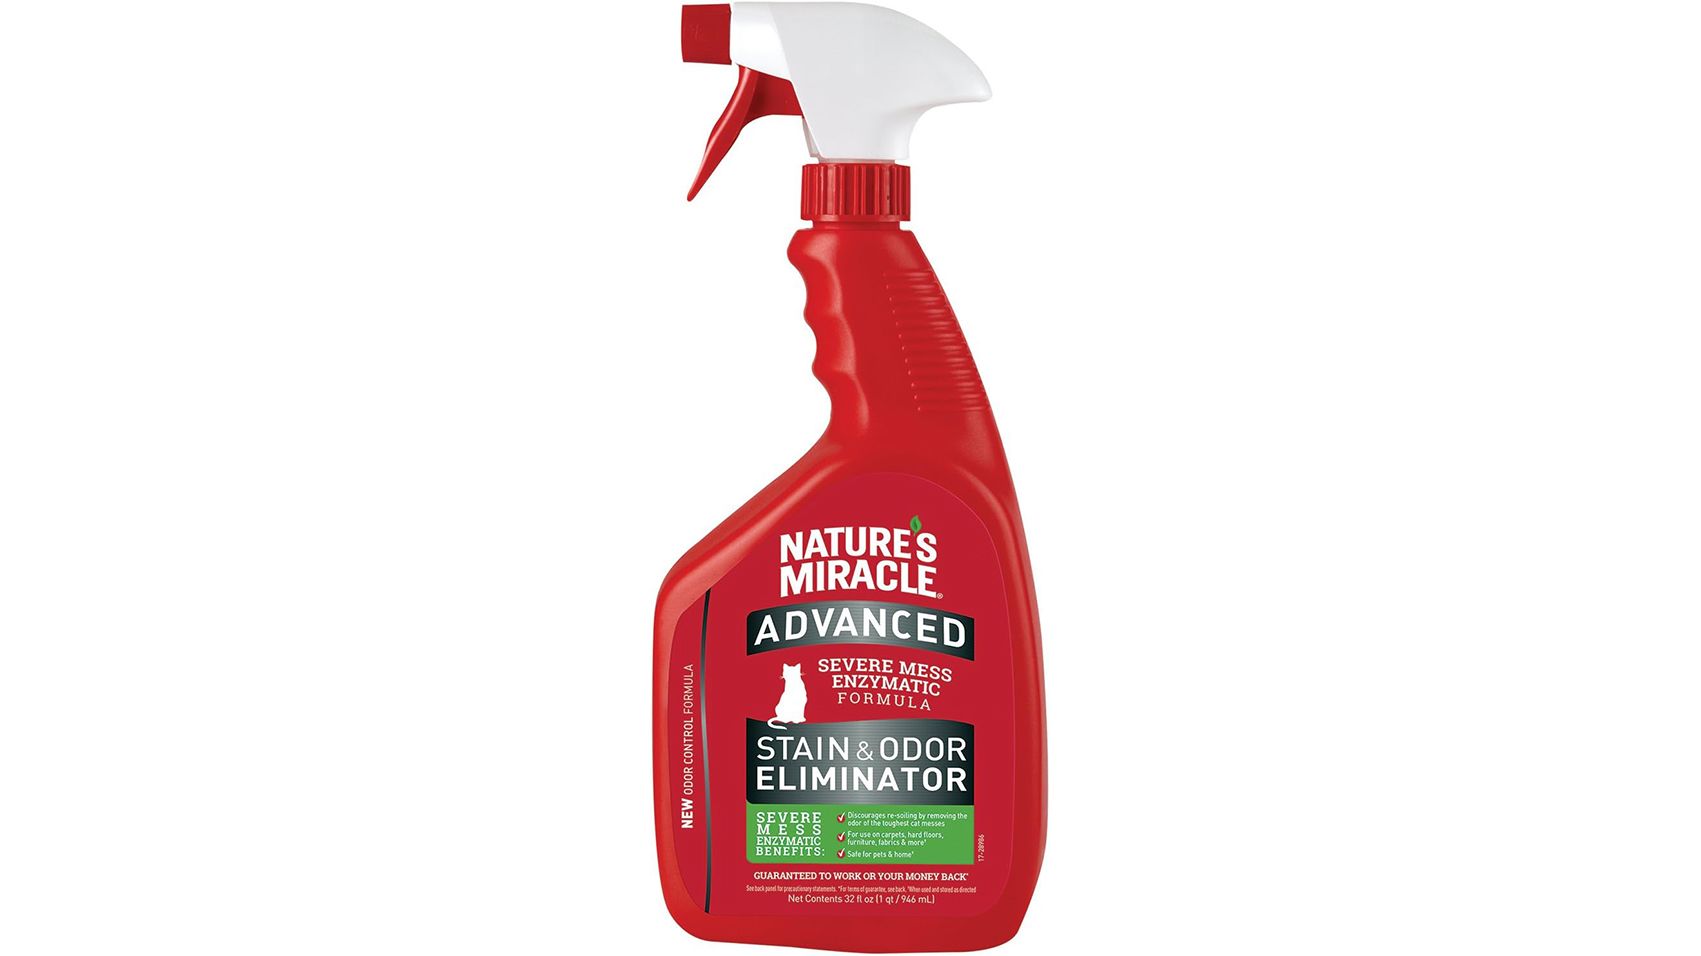 https://media.cnn.com/api/v1/images/stellar/prod/underscored-nature-s-miracle-advanced-cat-stain-and-odor-eliminator-spray.jpg?c=original